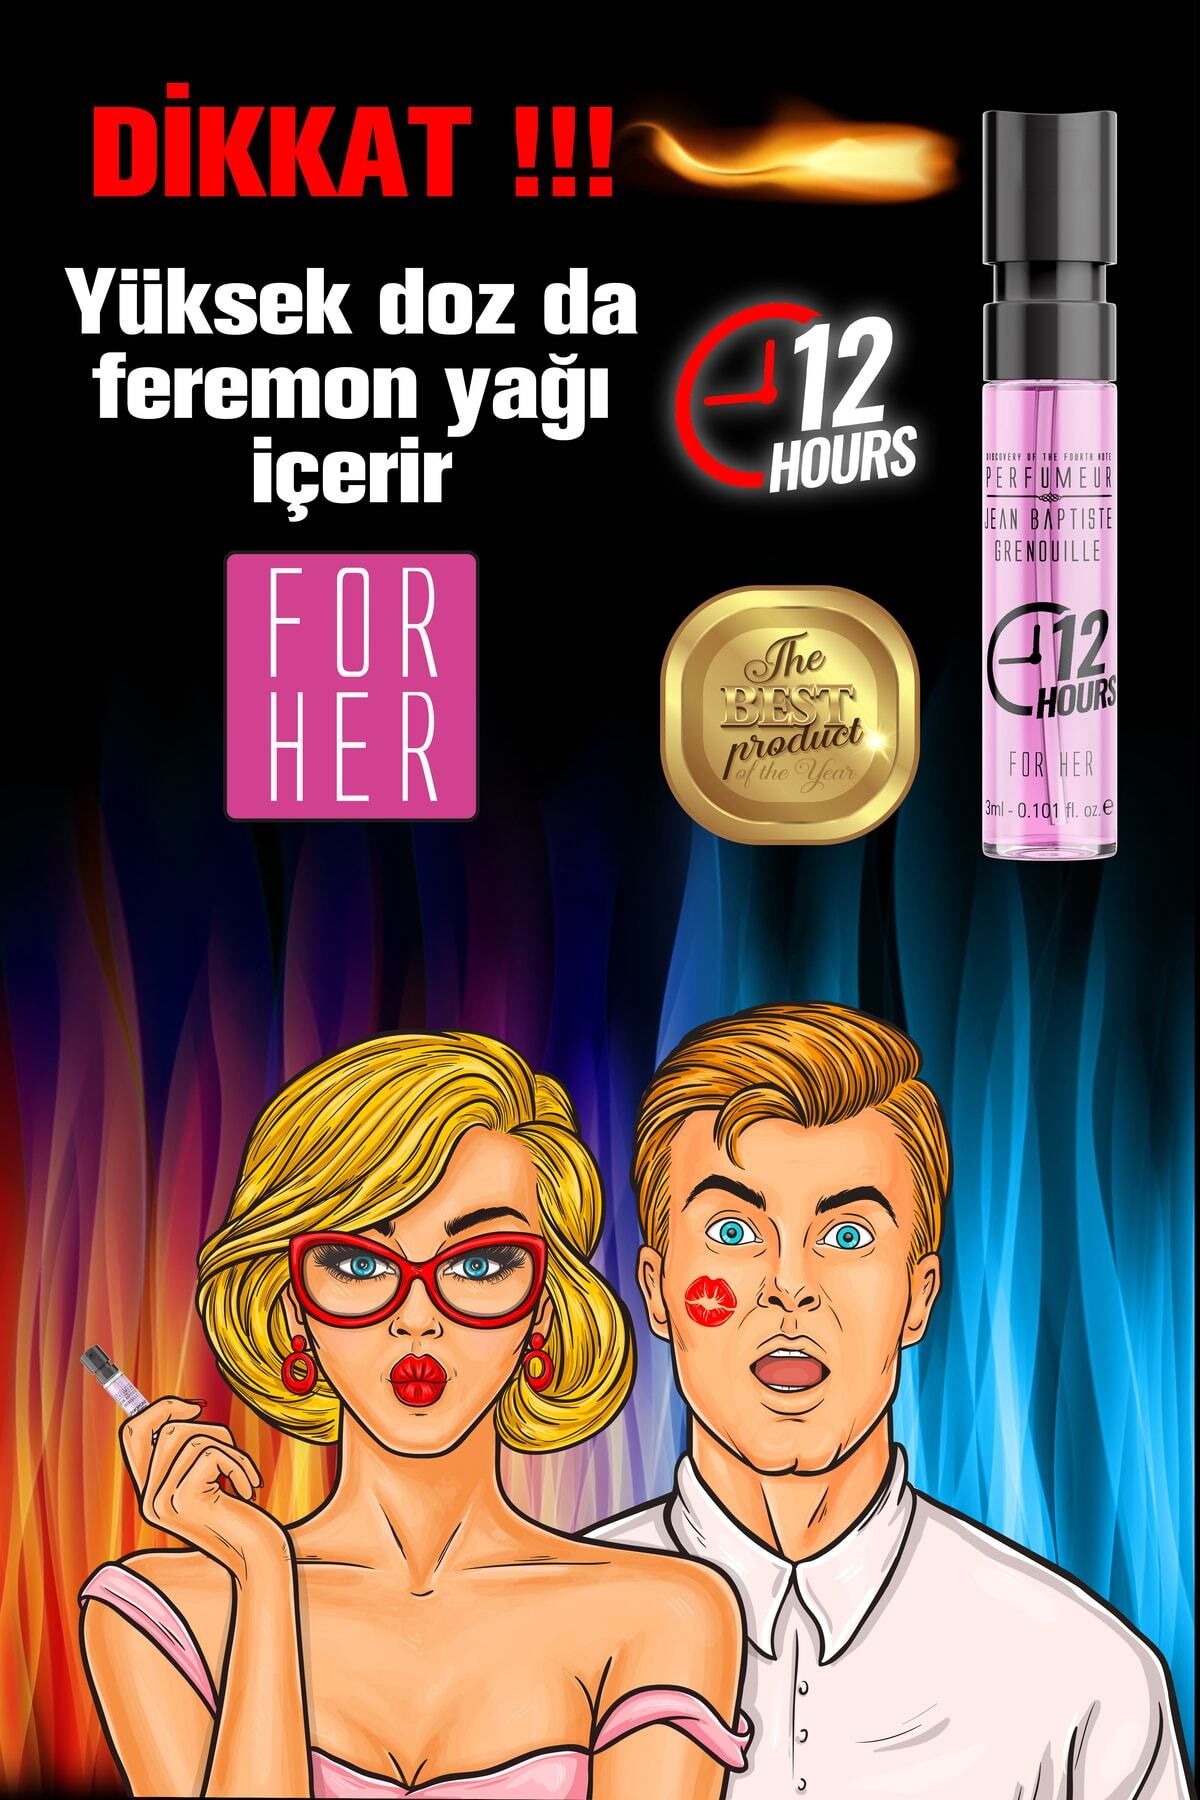 Jean Baptiste Grenouille Jbg 3 Ml Pheromone (feromon) Perfume For Her